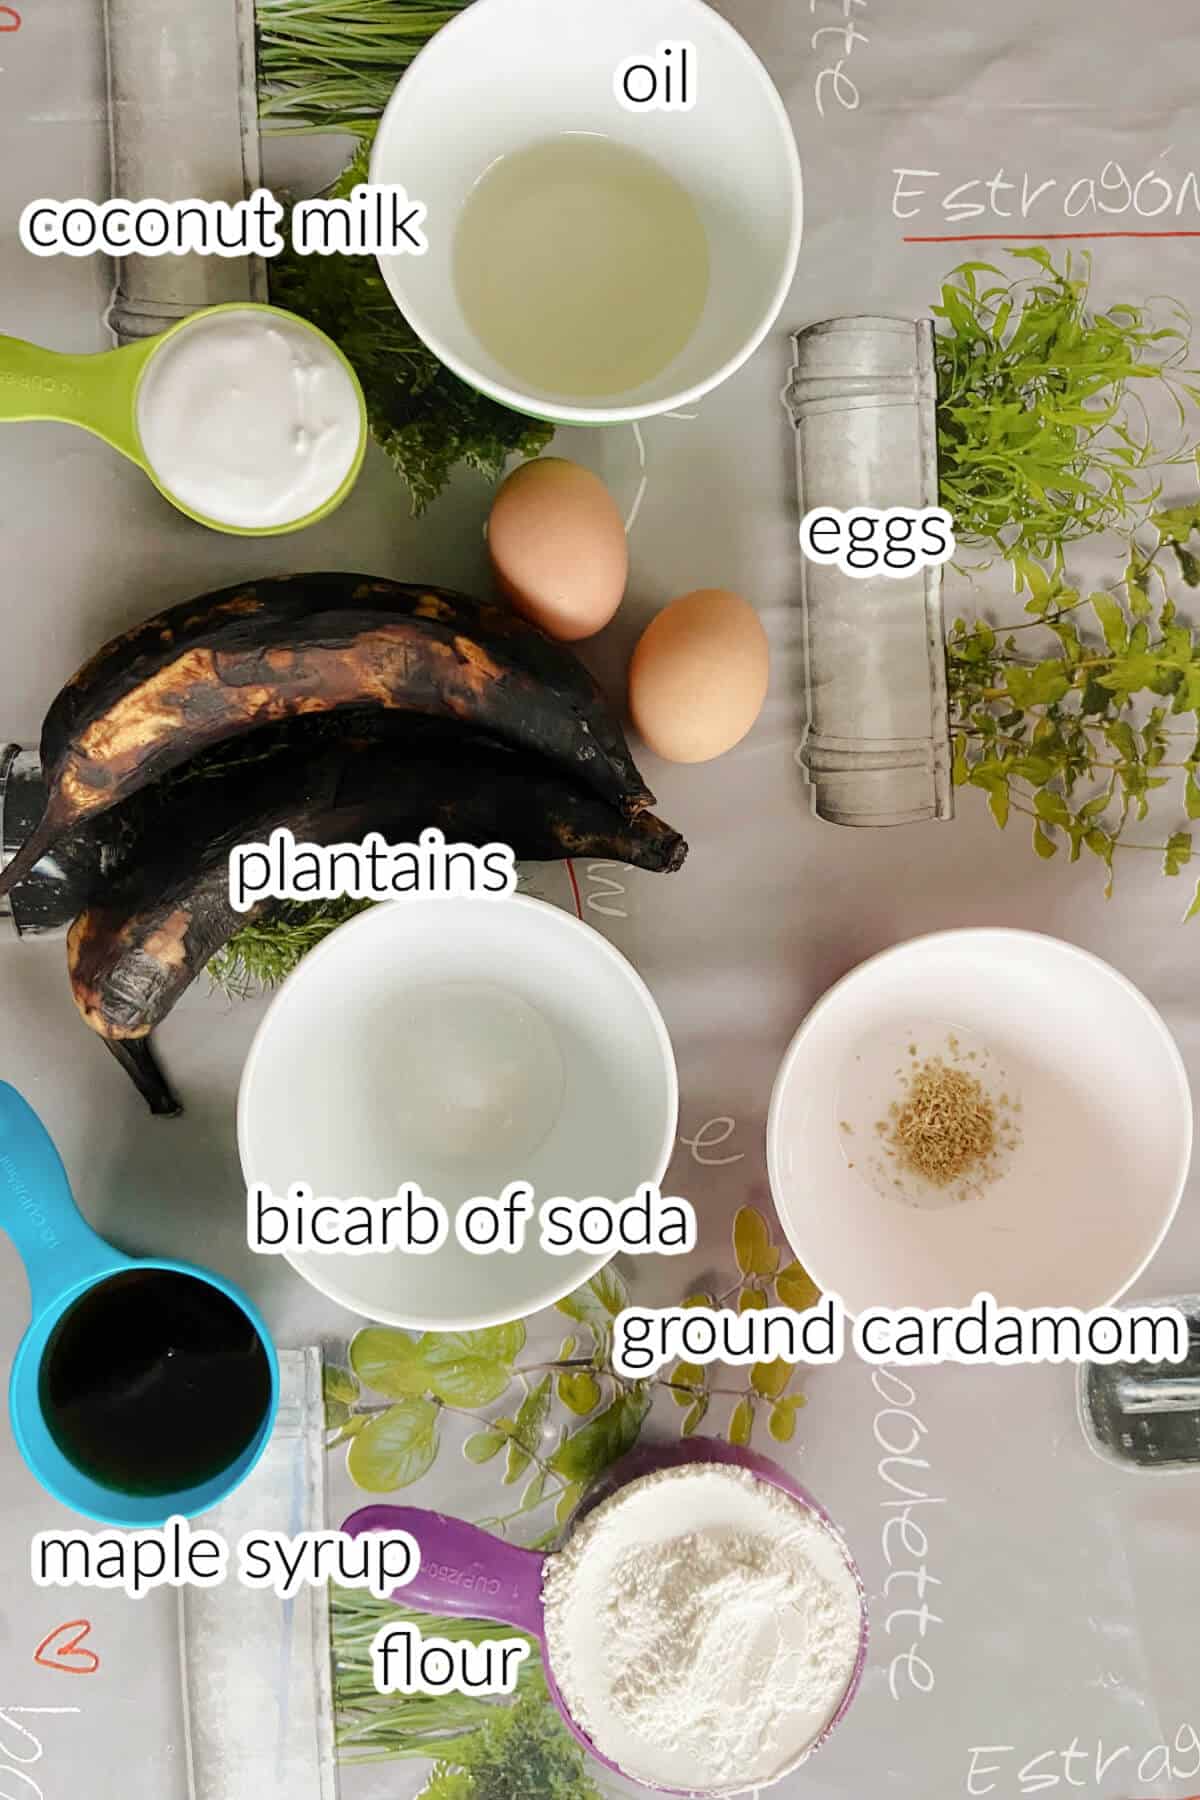 Ingredients used to make plantain cake.